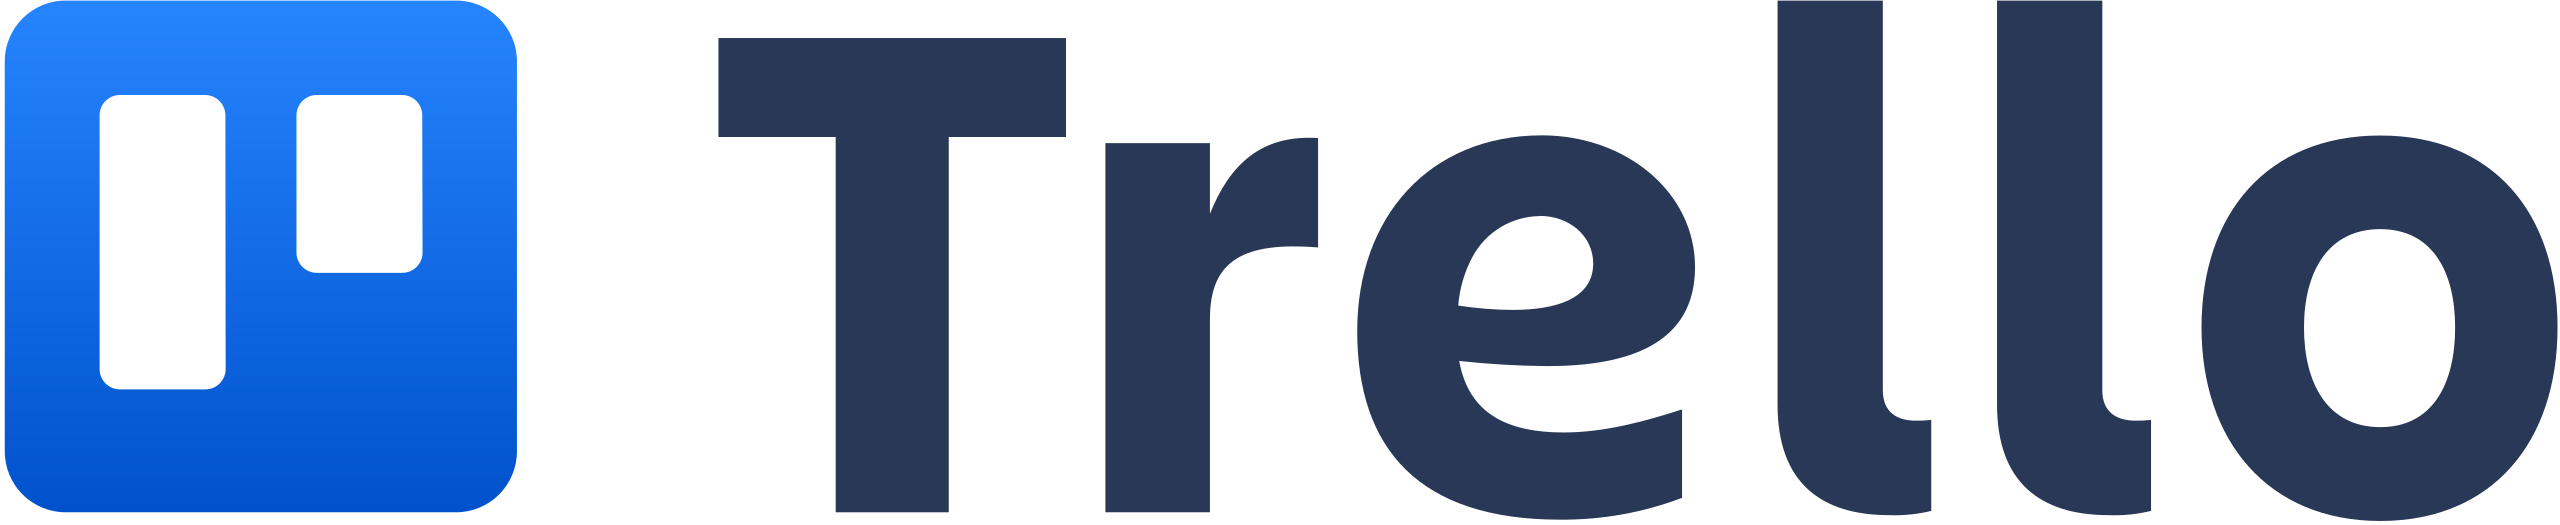 Trello-logo-blue.svg